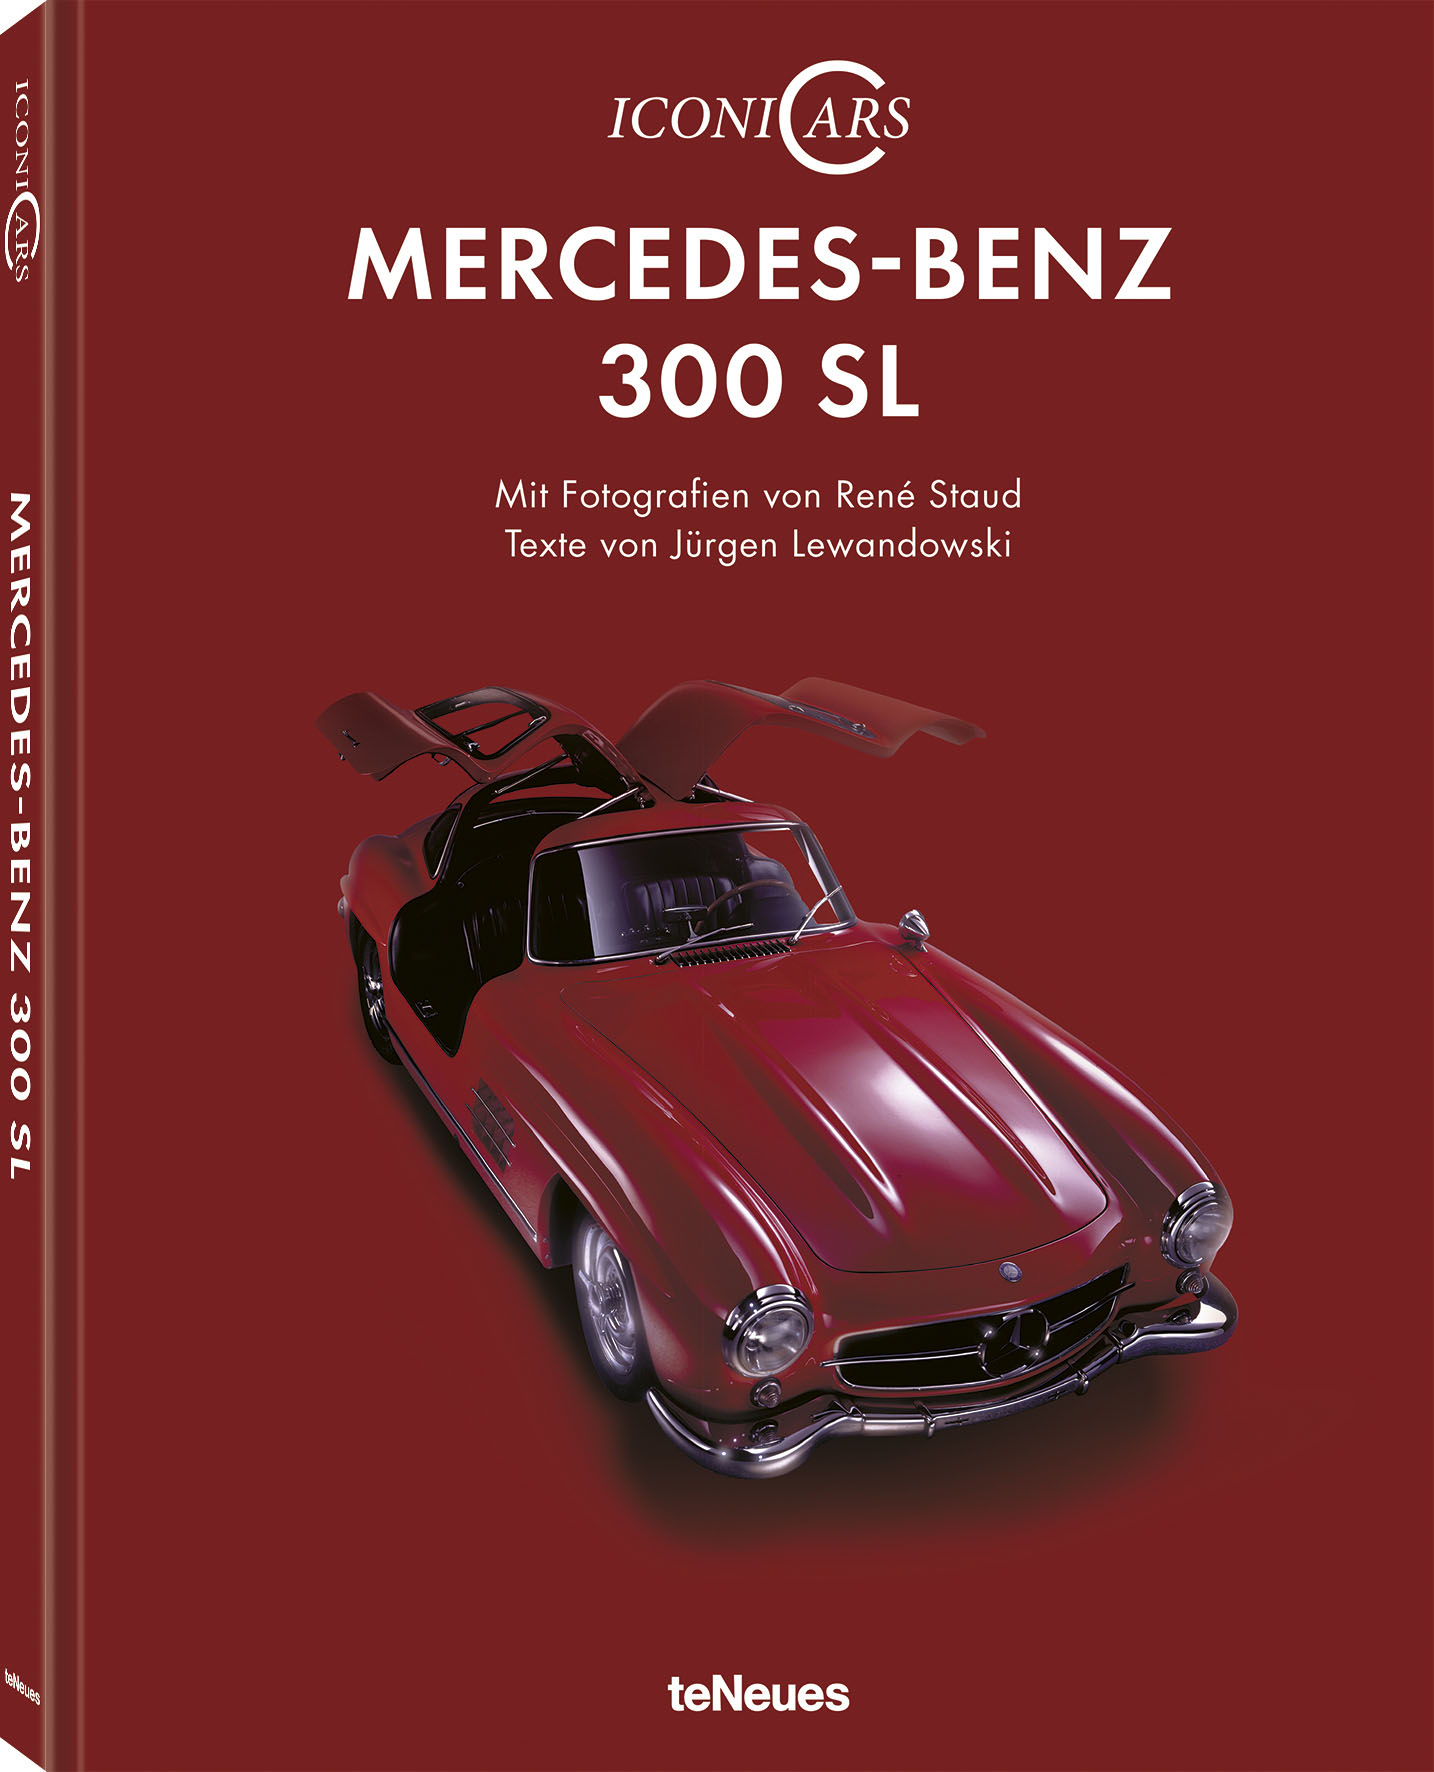 Mercedes-Benz 300 SL | IconiCars